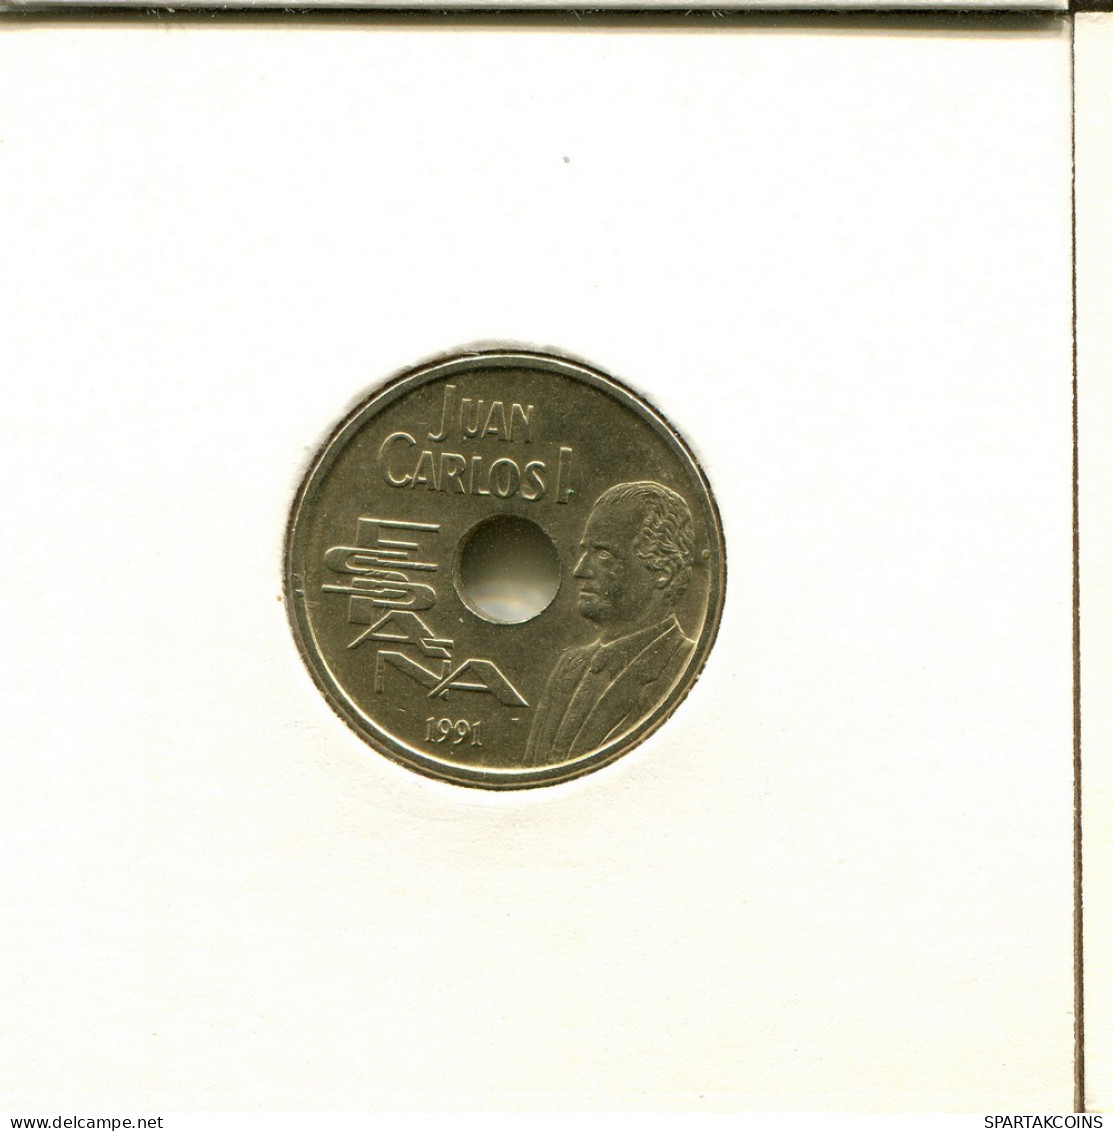 25 PESETAS 1991 ESPAÑA Moneda SPAIN #AV128.E - 25 Pesetas